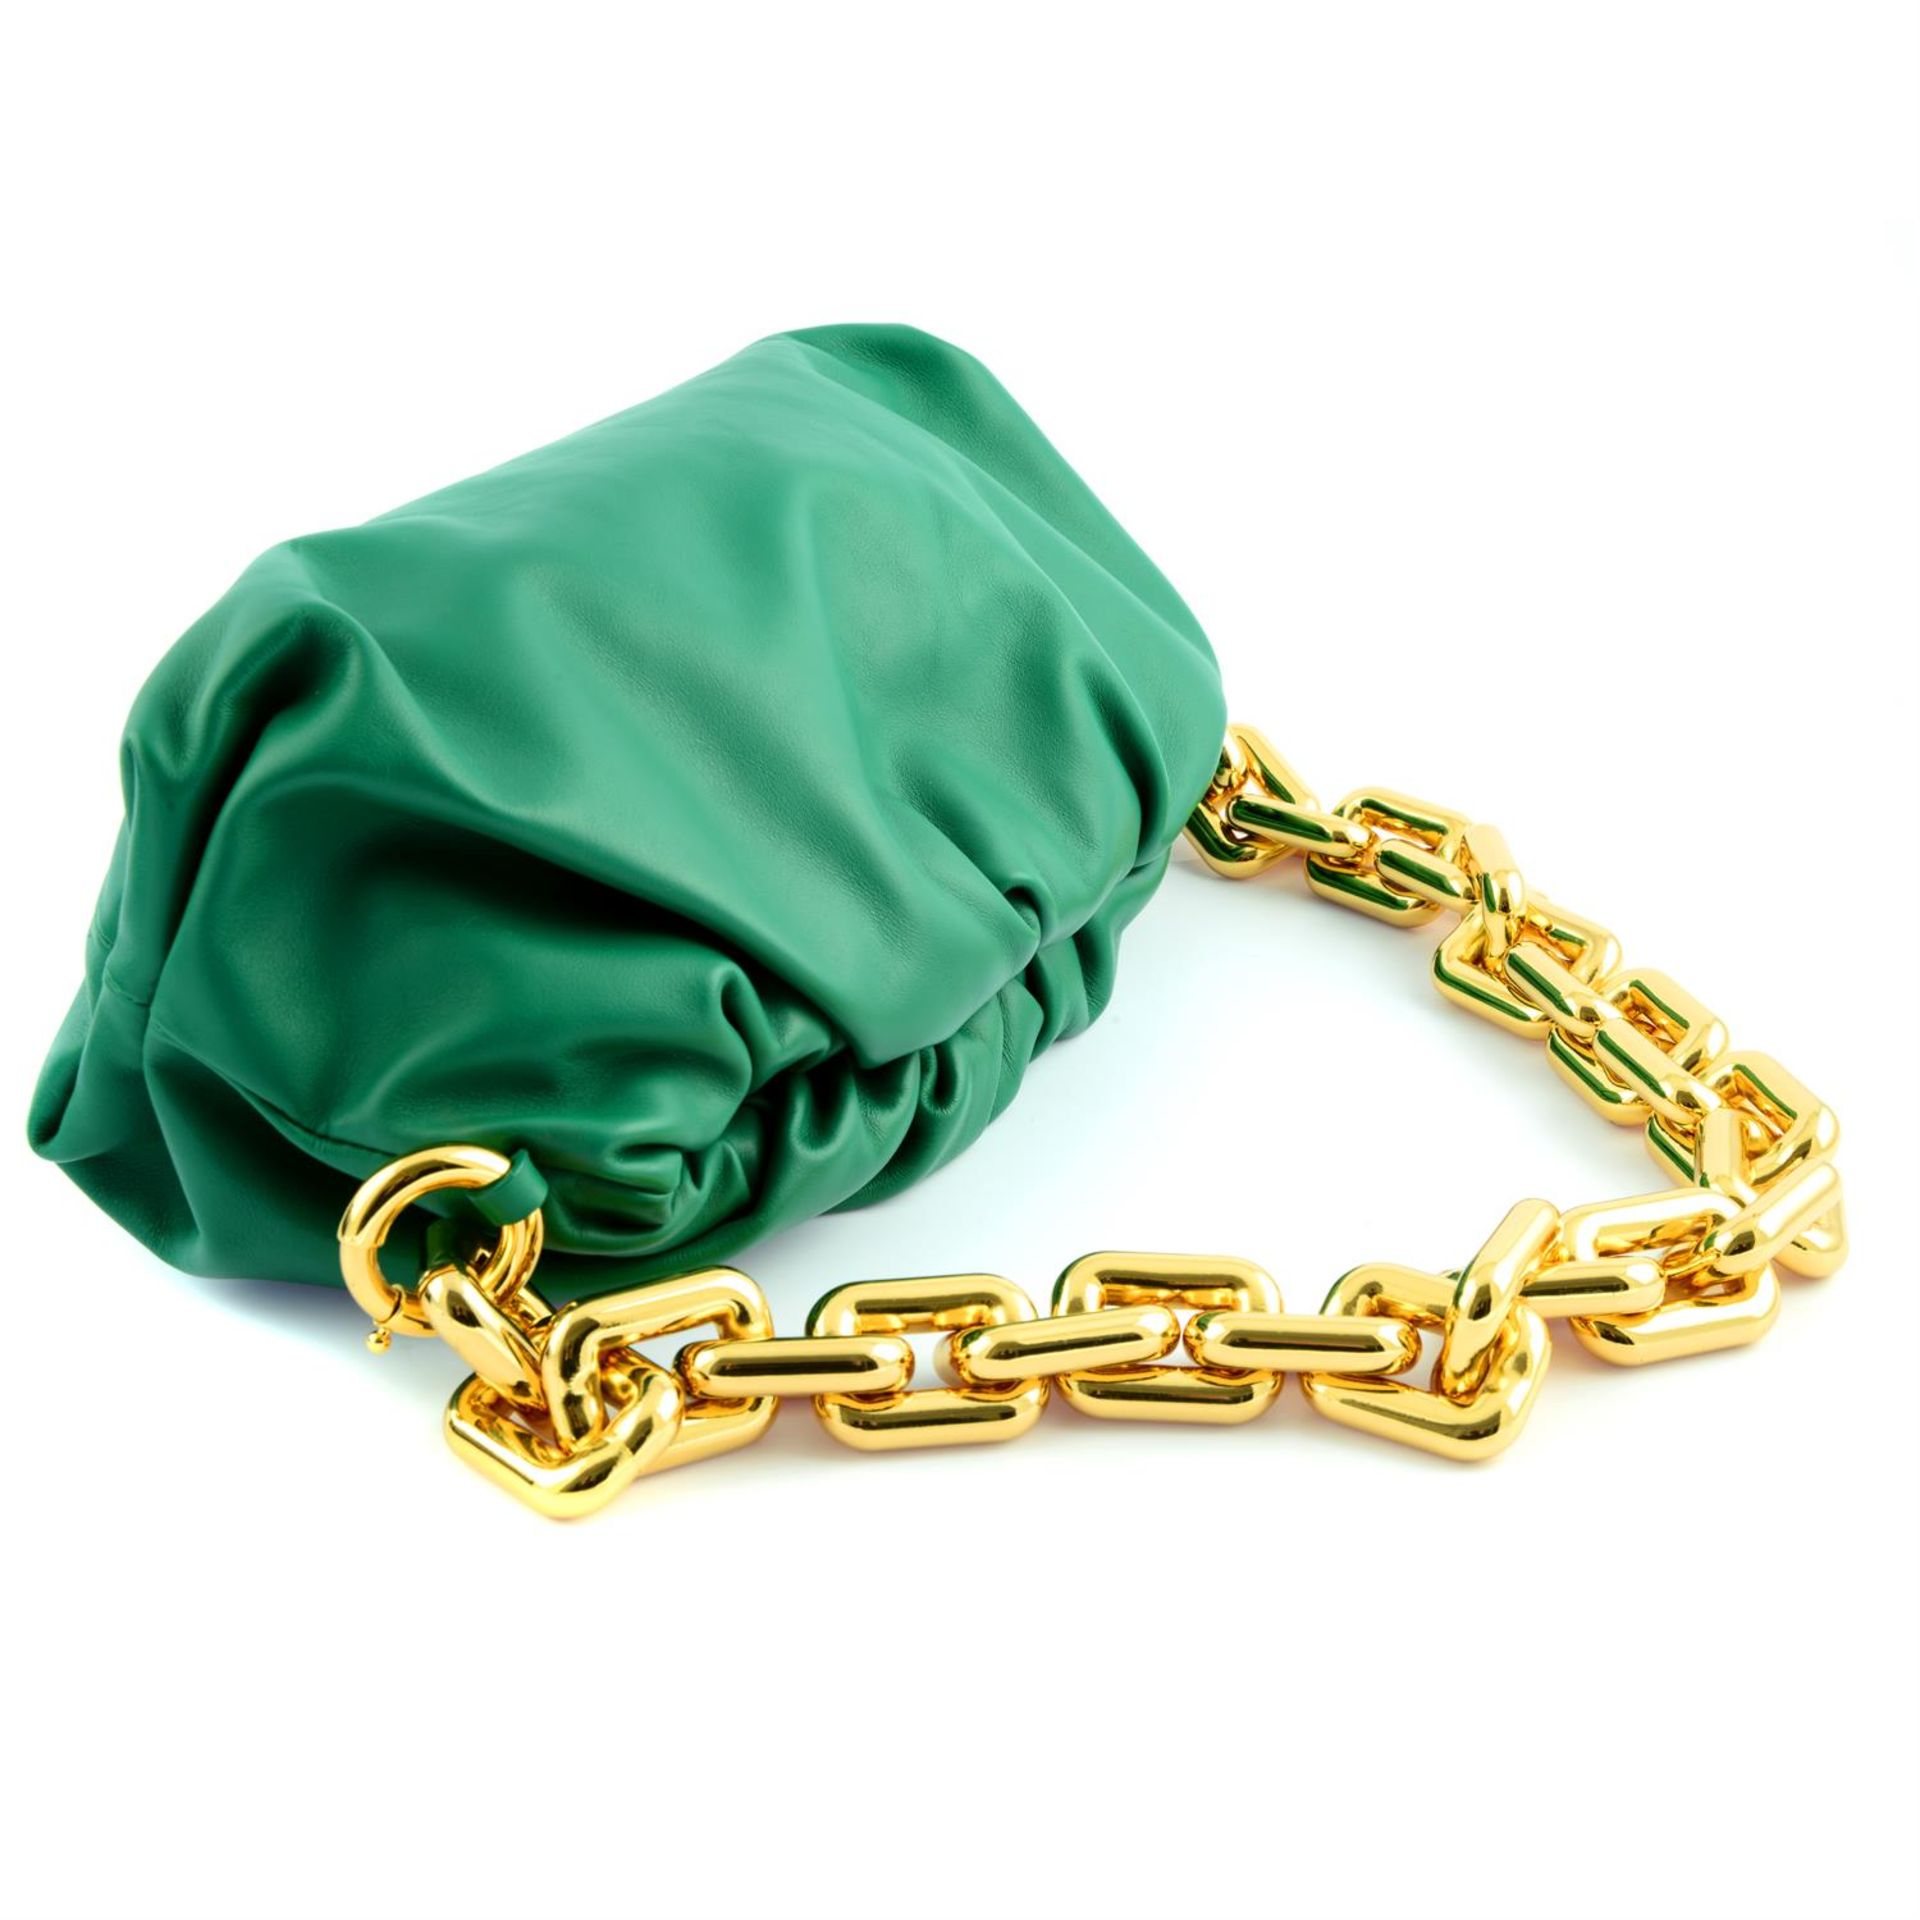 BOTTEGA VENETA - a green leather chain pouch. - Image 3 of 4